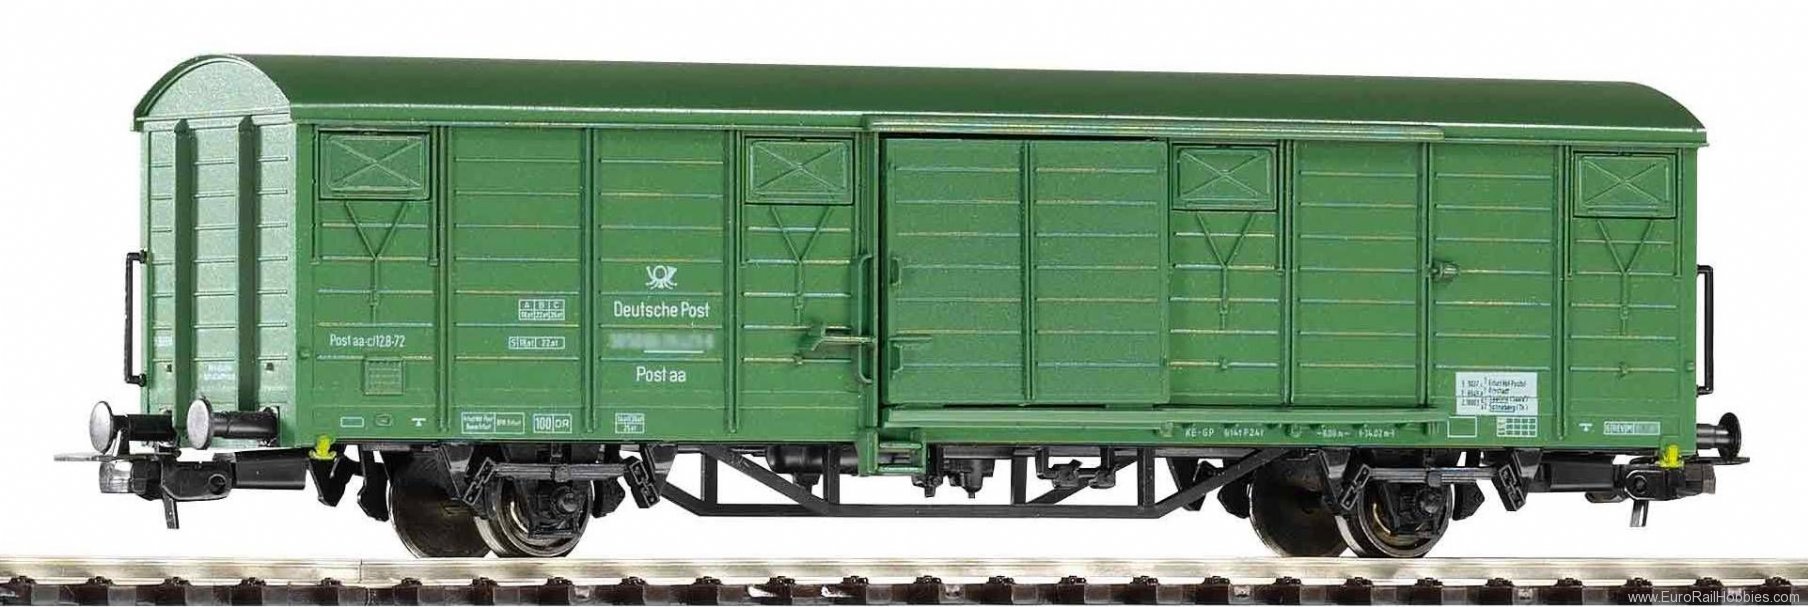 Piko 24504 Covered freight wagon Post aa DR IV (Piko Cla